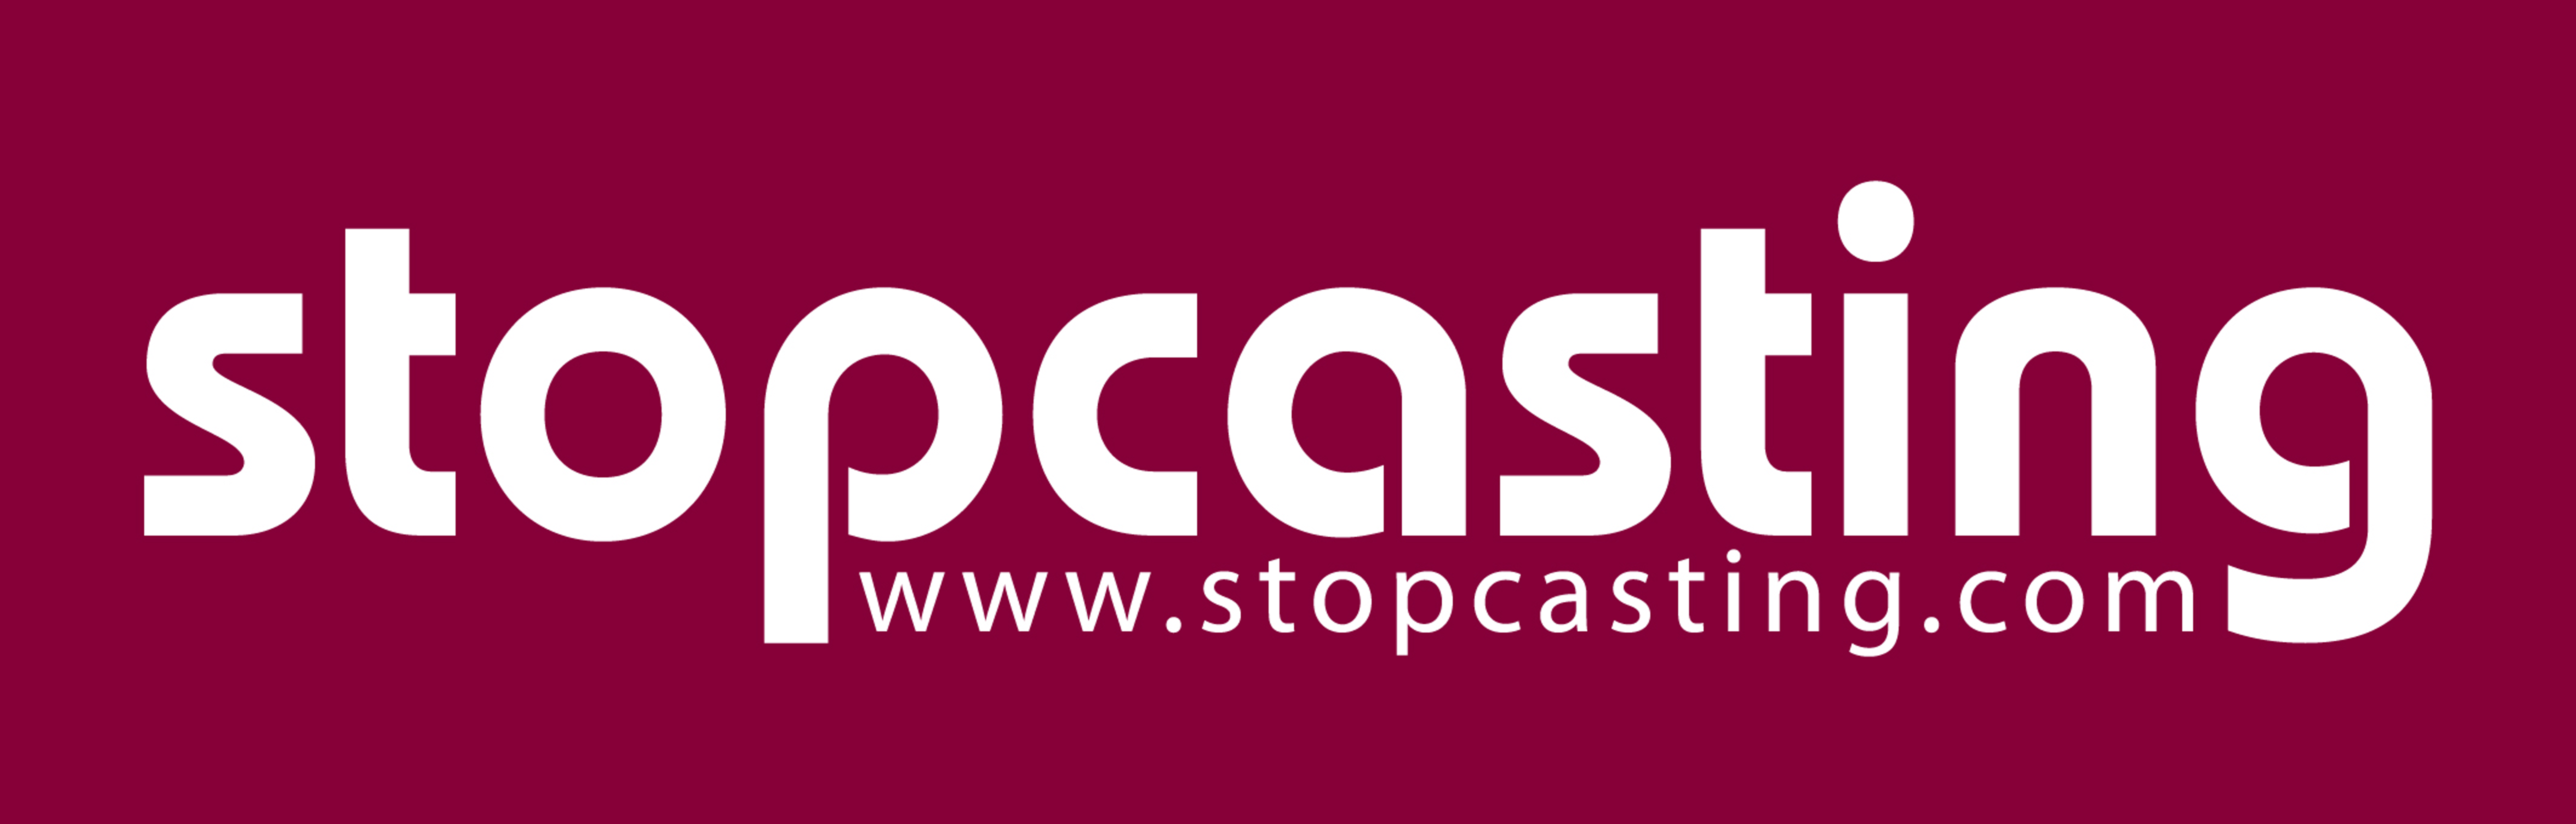 Stopcasting_logo